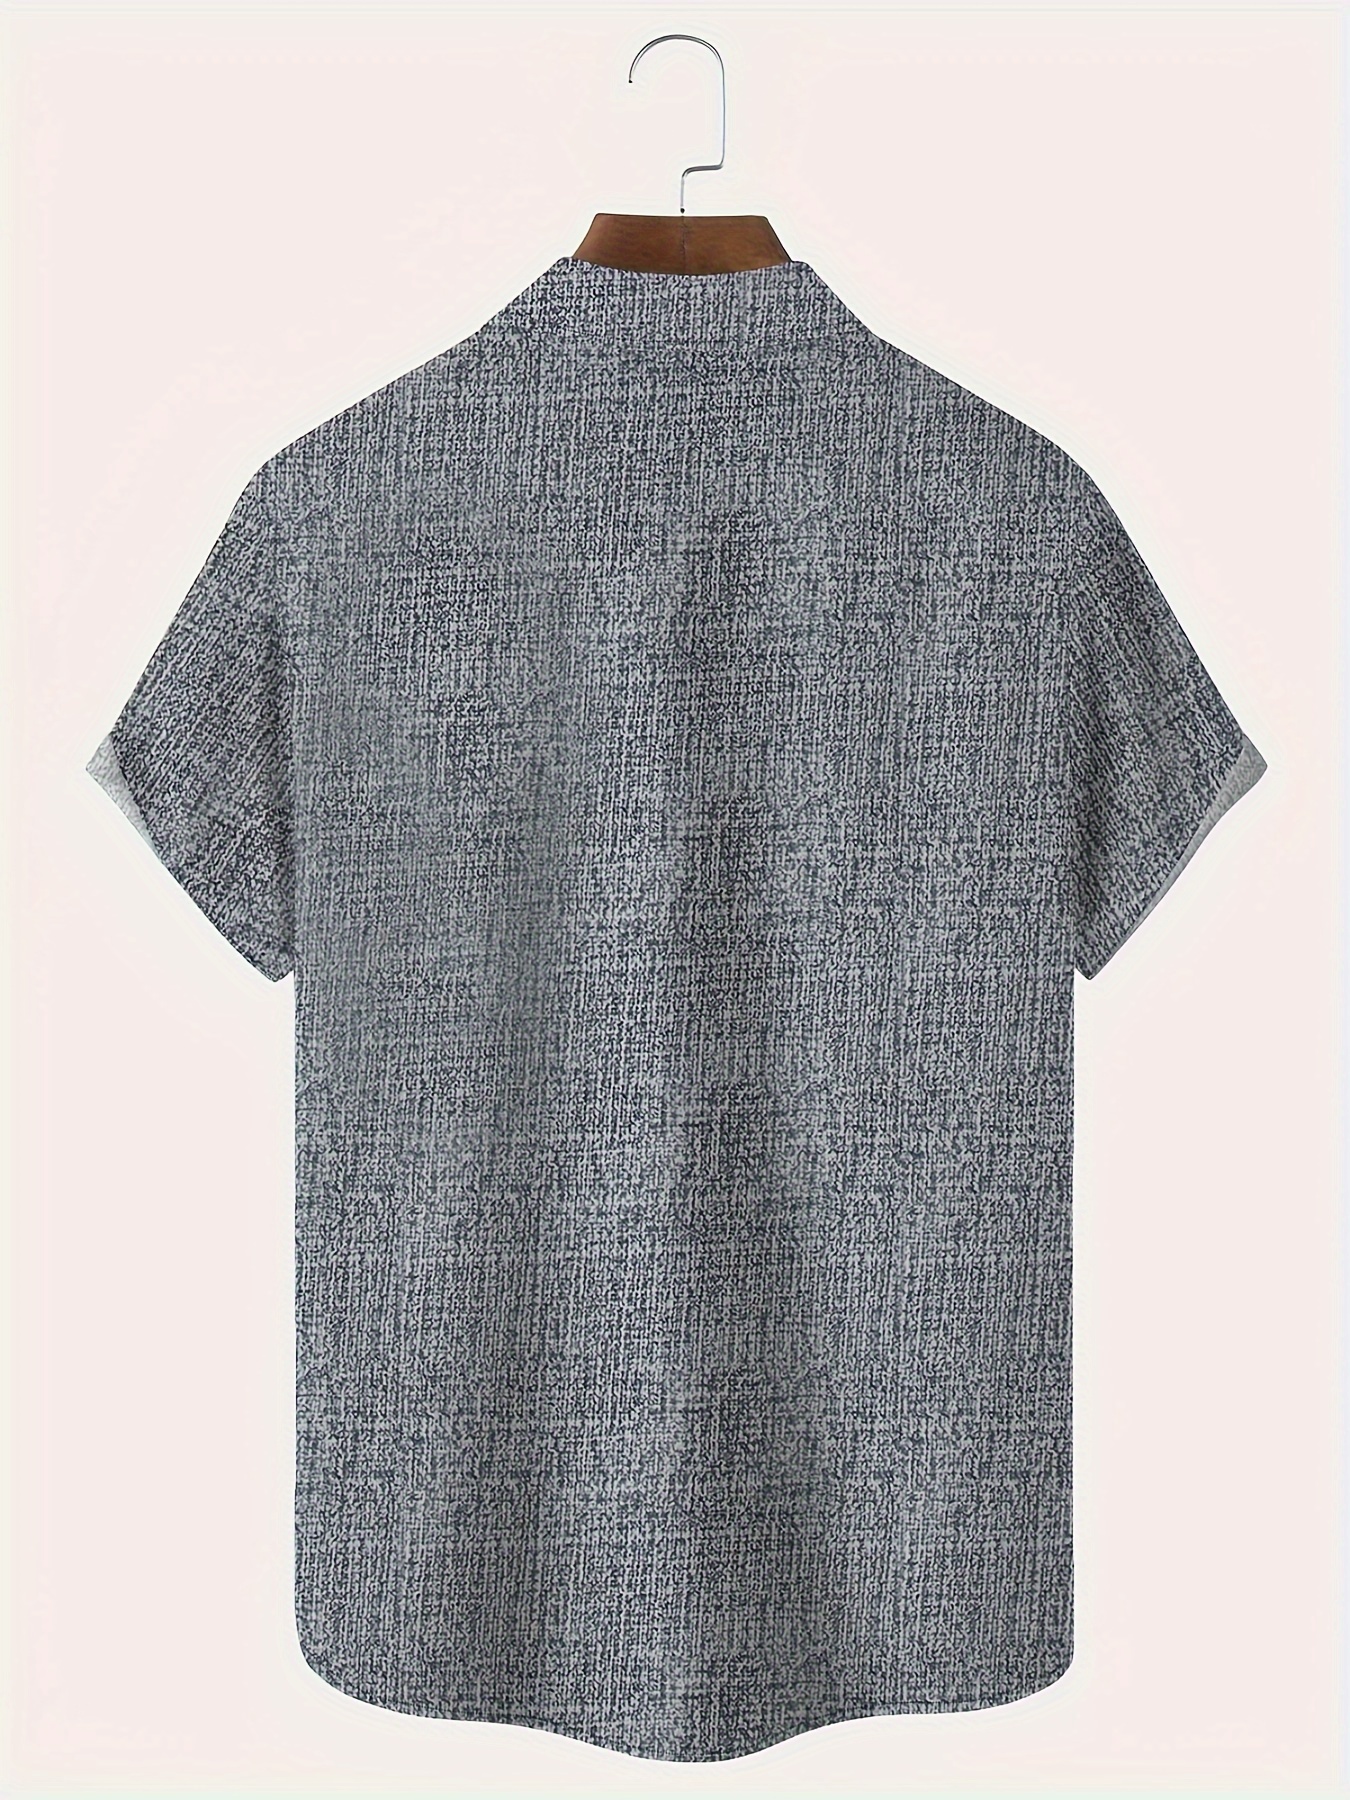 XMMSWDLA Mens Short Sleeve Shirts Button Down Tops Fishing Tees Spread  Collar Plain Summer Blouses Gray Tee Shirts Mens 